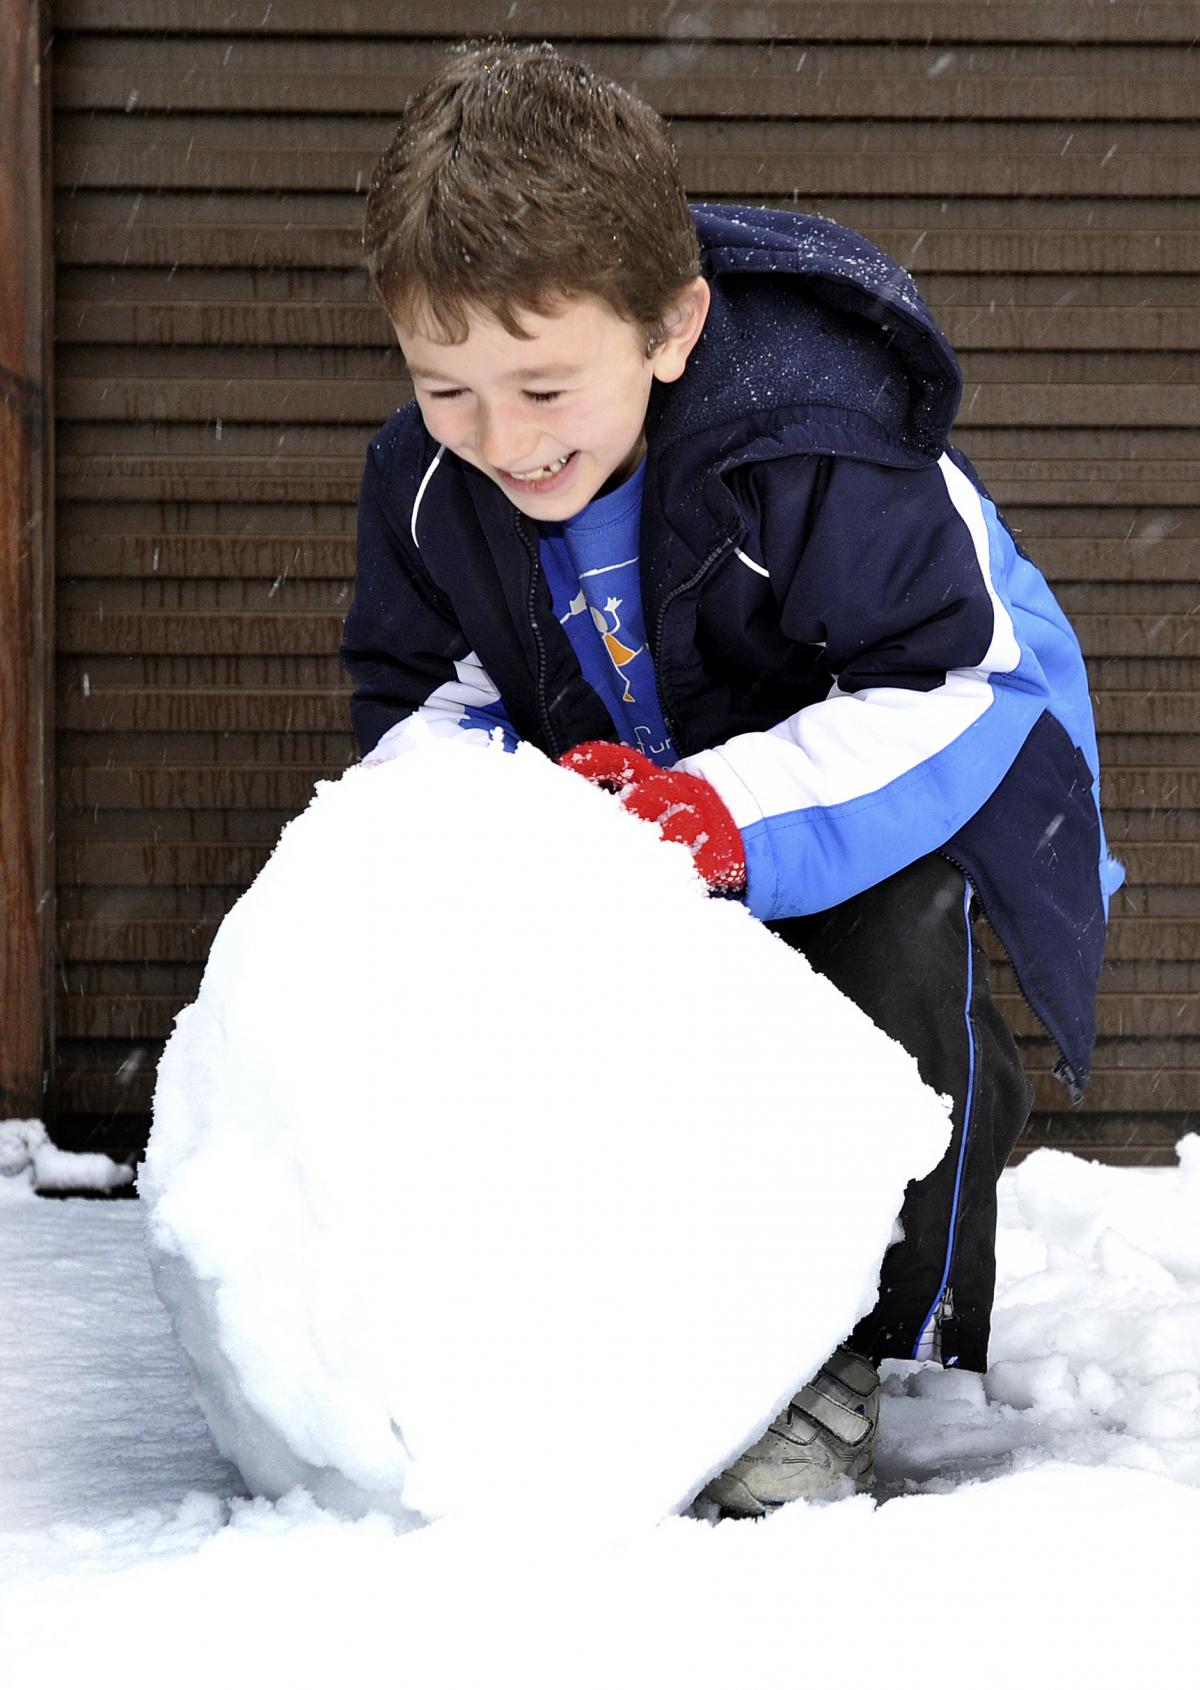 Aiden Messenger having fun with a snowball